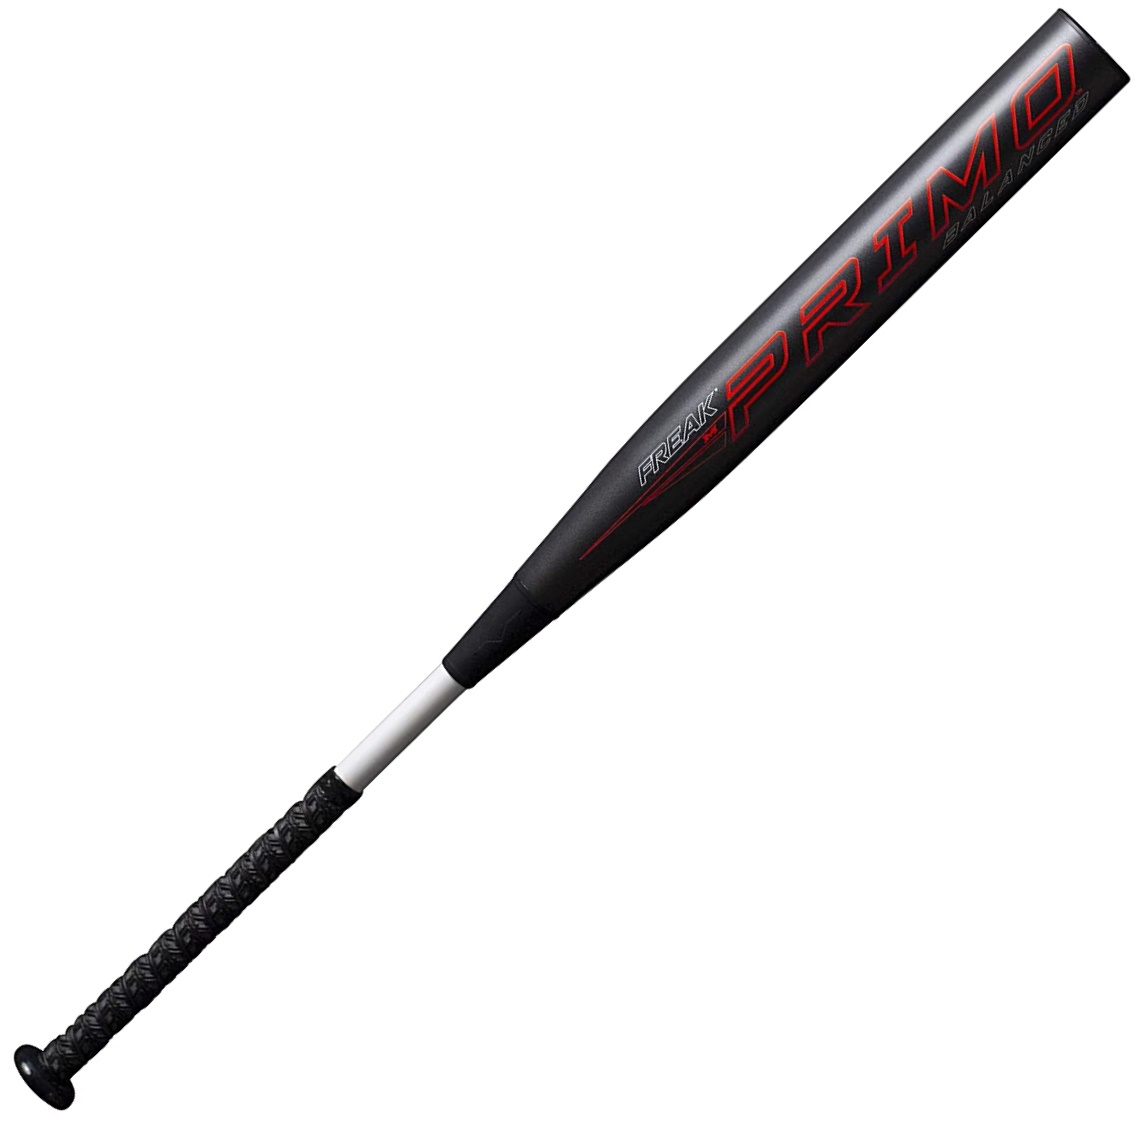 miken-freak-primo-14-usa-asa-balanced-slowpitch-softball-bat-34-inch-28-oz MP21BA-3-28 Miken  <p>The 2021 Freak Primo balanced USA bat offers a superior feel